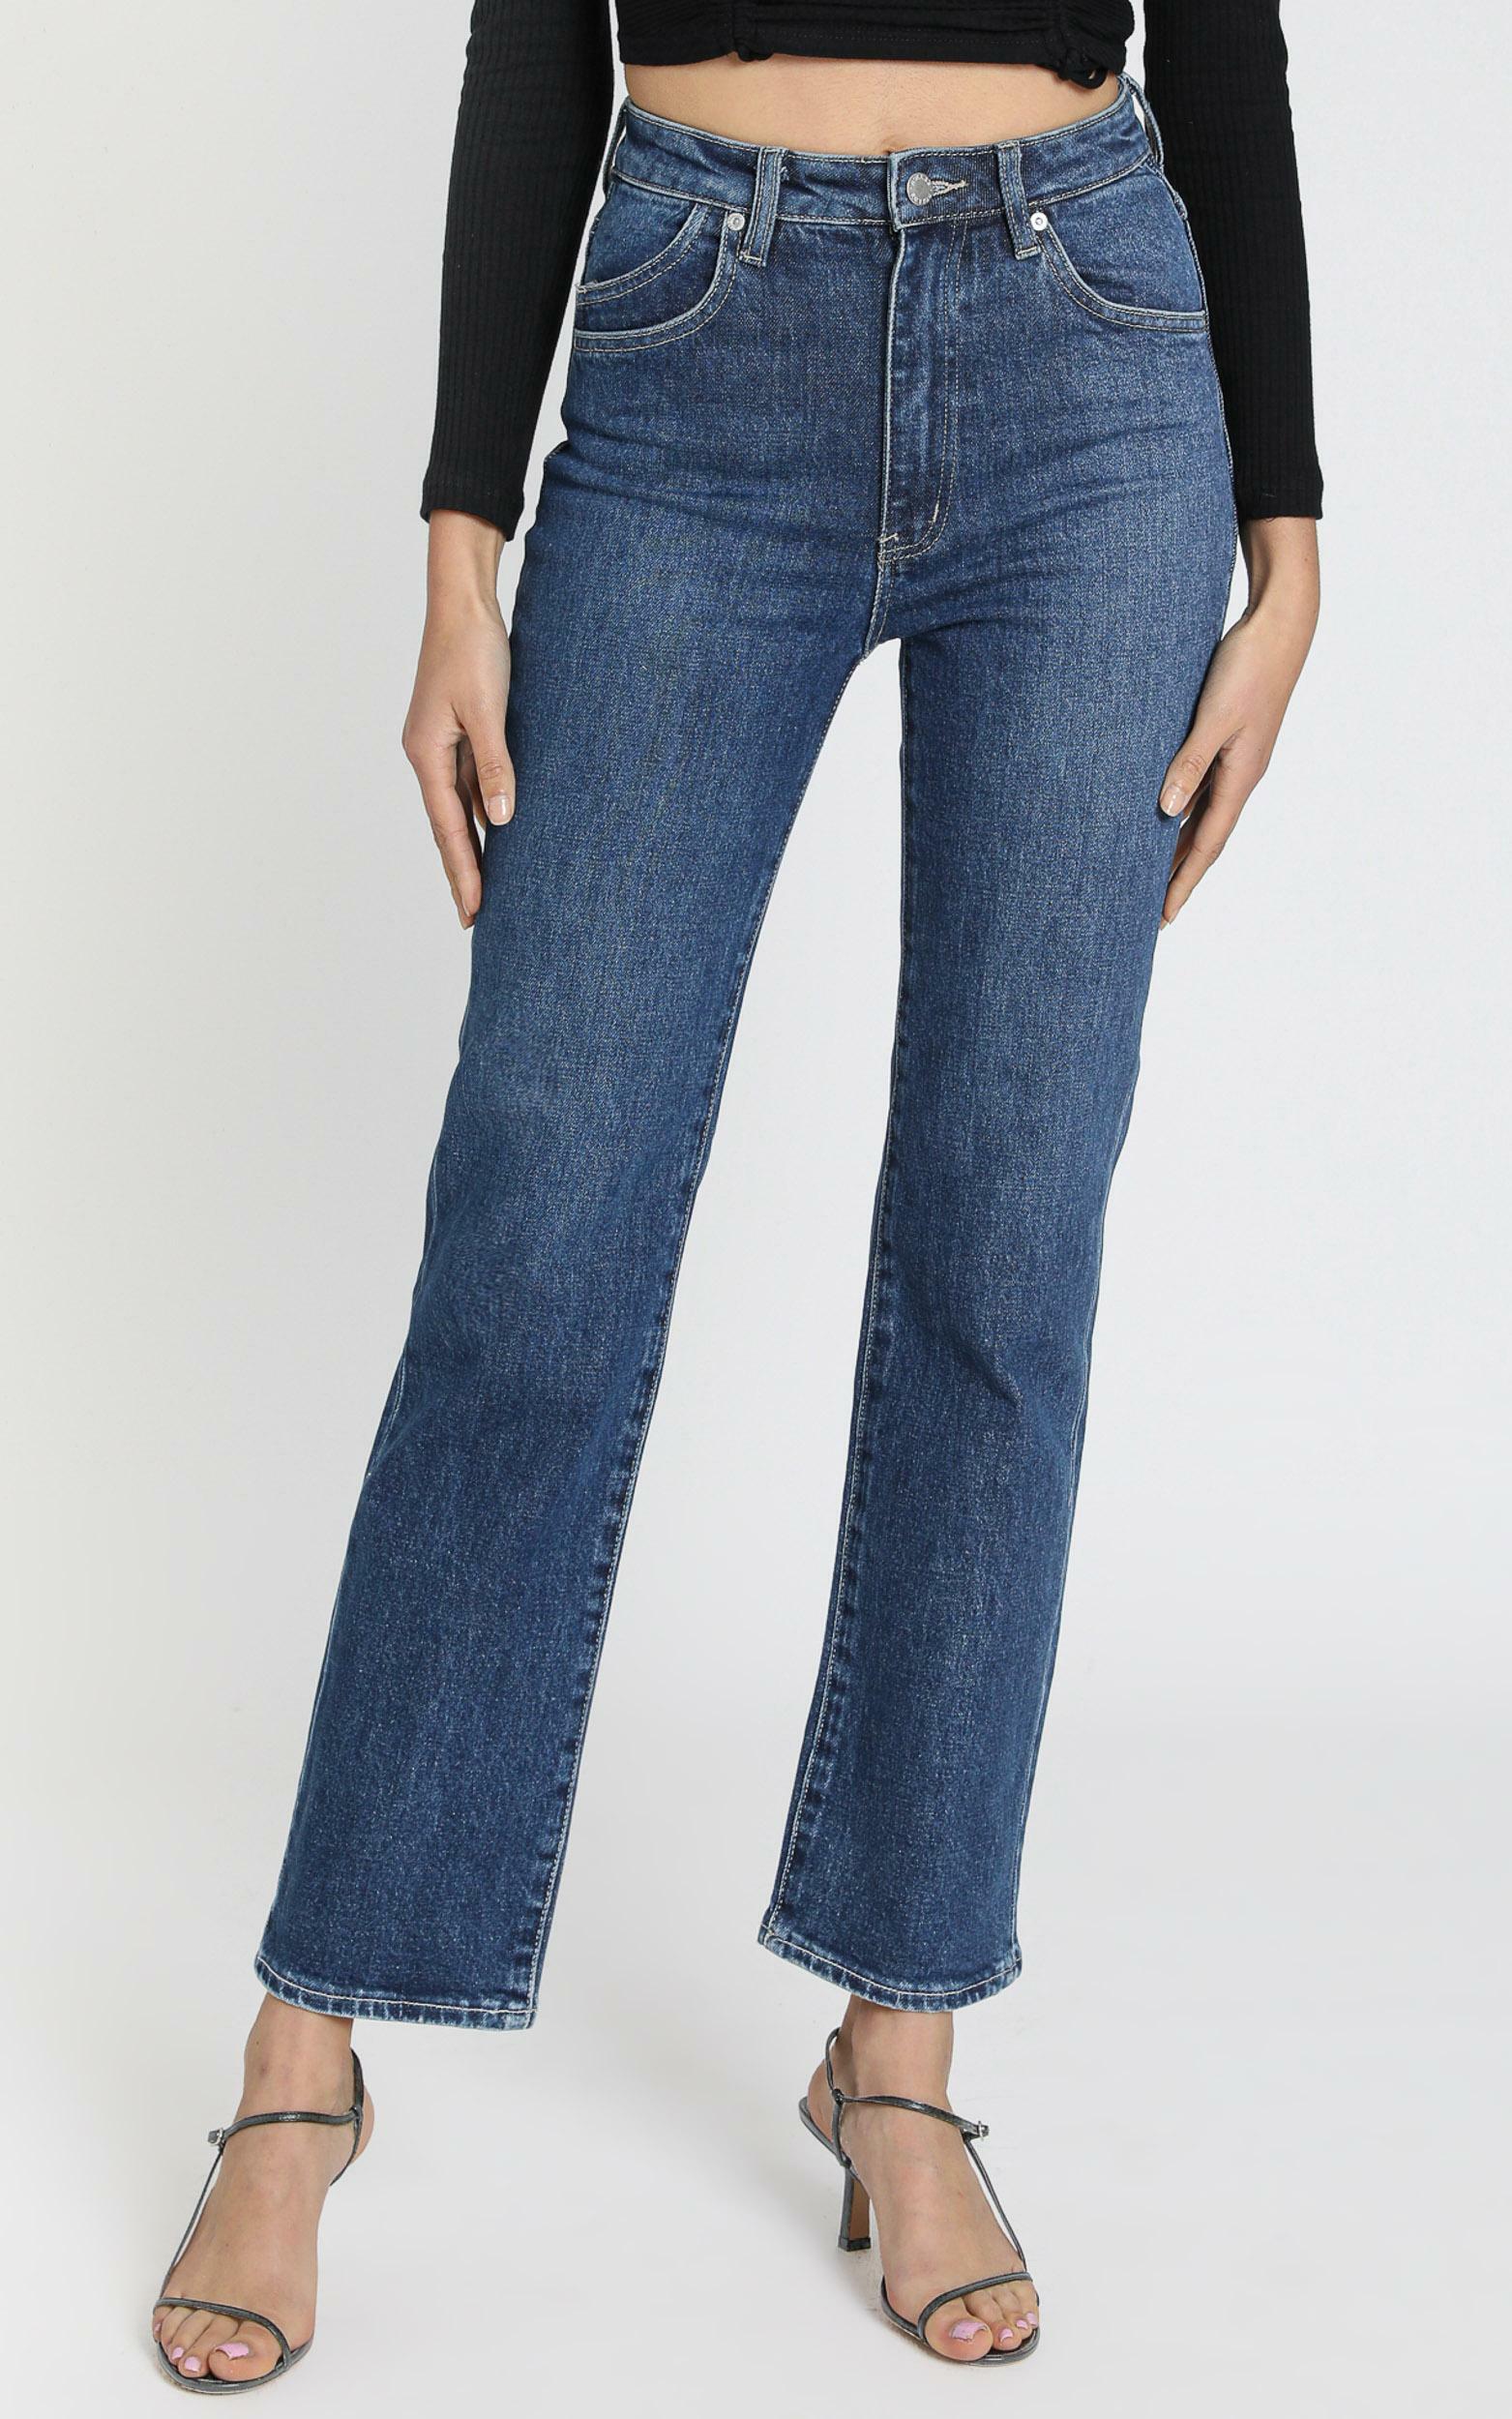 Rollas - Original Straight Jeans Daria in Blue Organic - 6 (XS), Blue, hi-res image number null